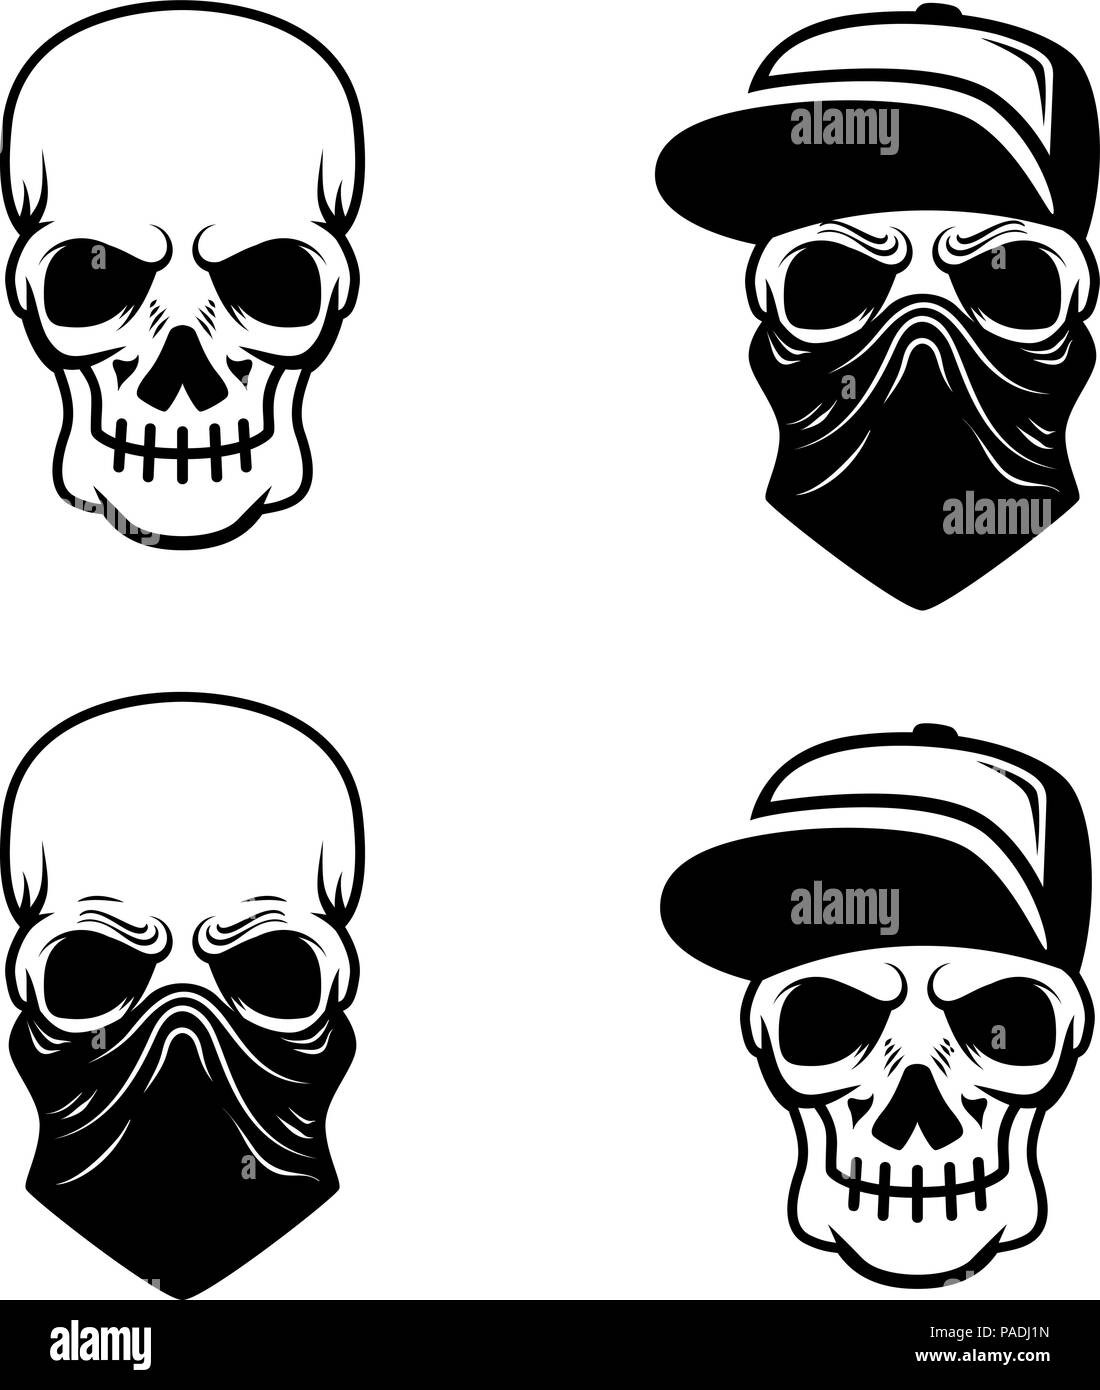 Gangster skull with baseball cap and bandana. Design element for logo, label, emblem, sign, t shirt. Vector illustration Stock Vector